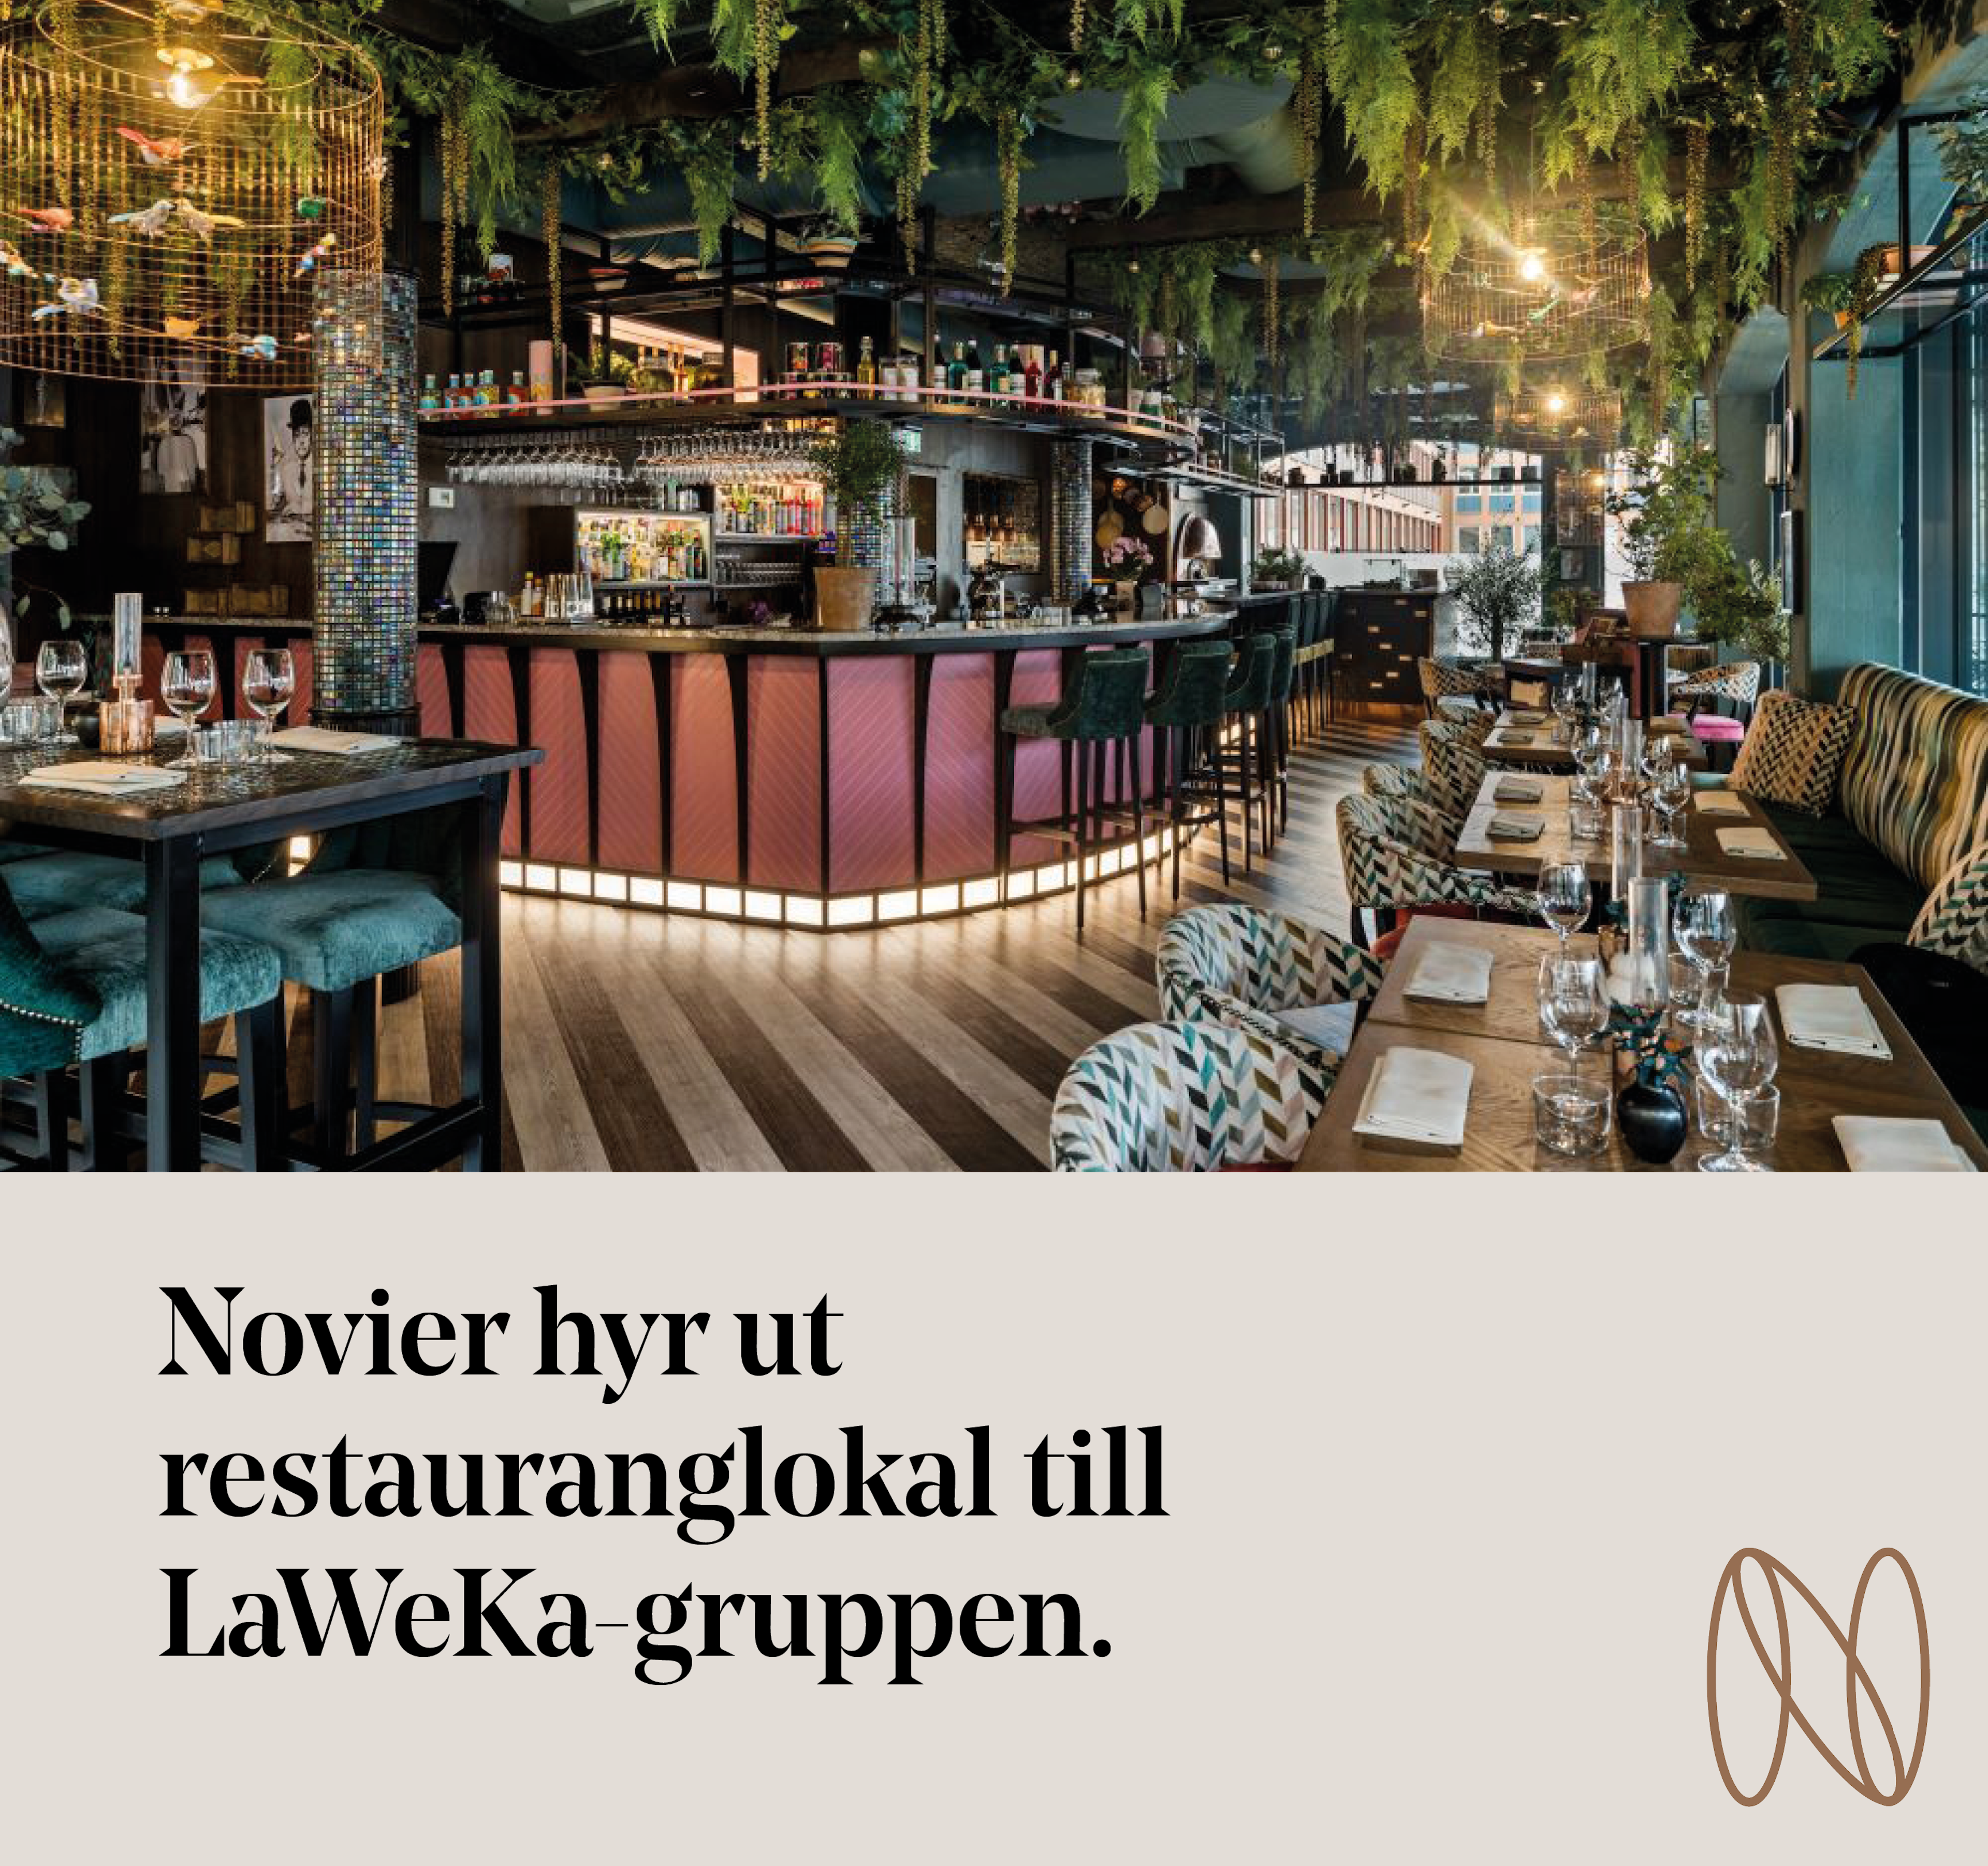 Pressmeddelanden: Novier hyr ut restauranglokal till LaWeKa-grupppen.